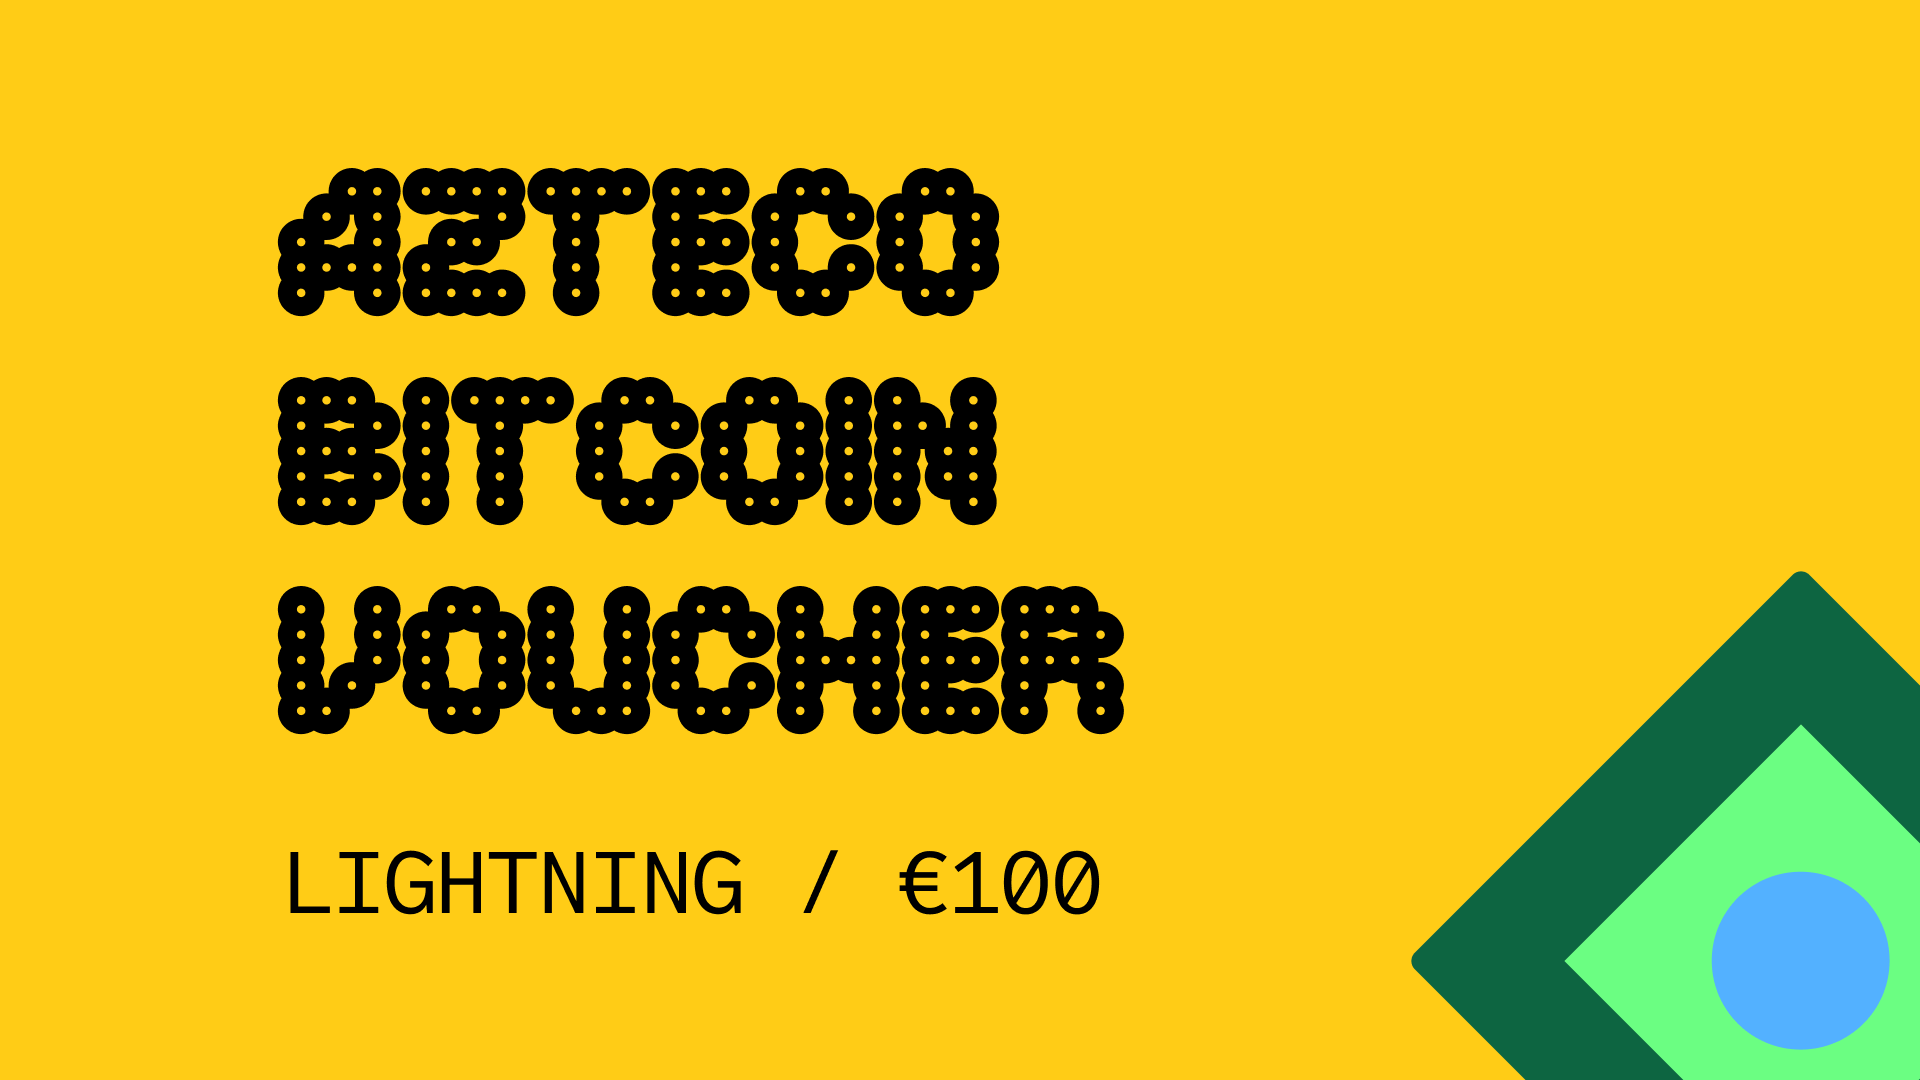 Azteco Bitcoin Lighting €100 Voucher 112.98 $